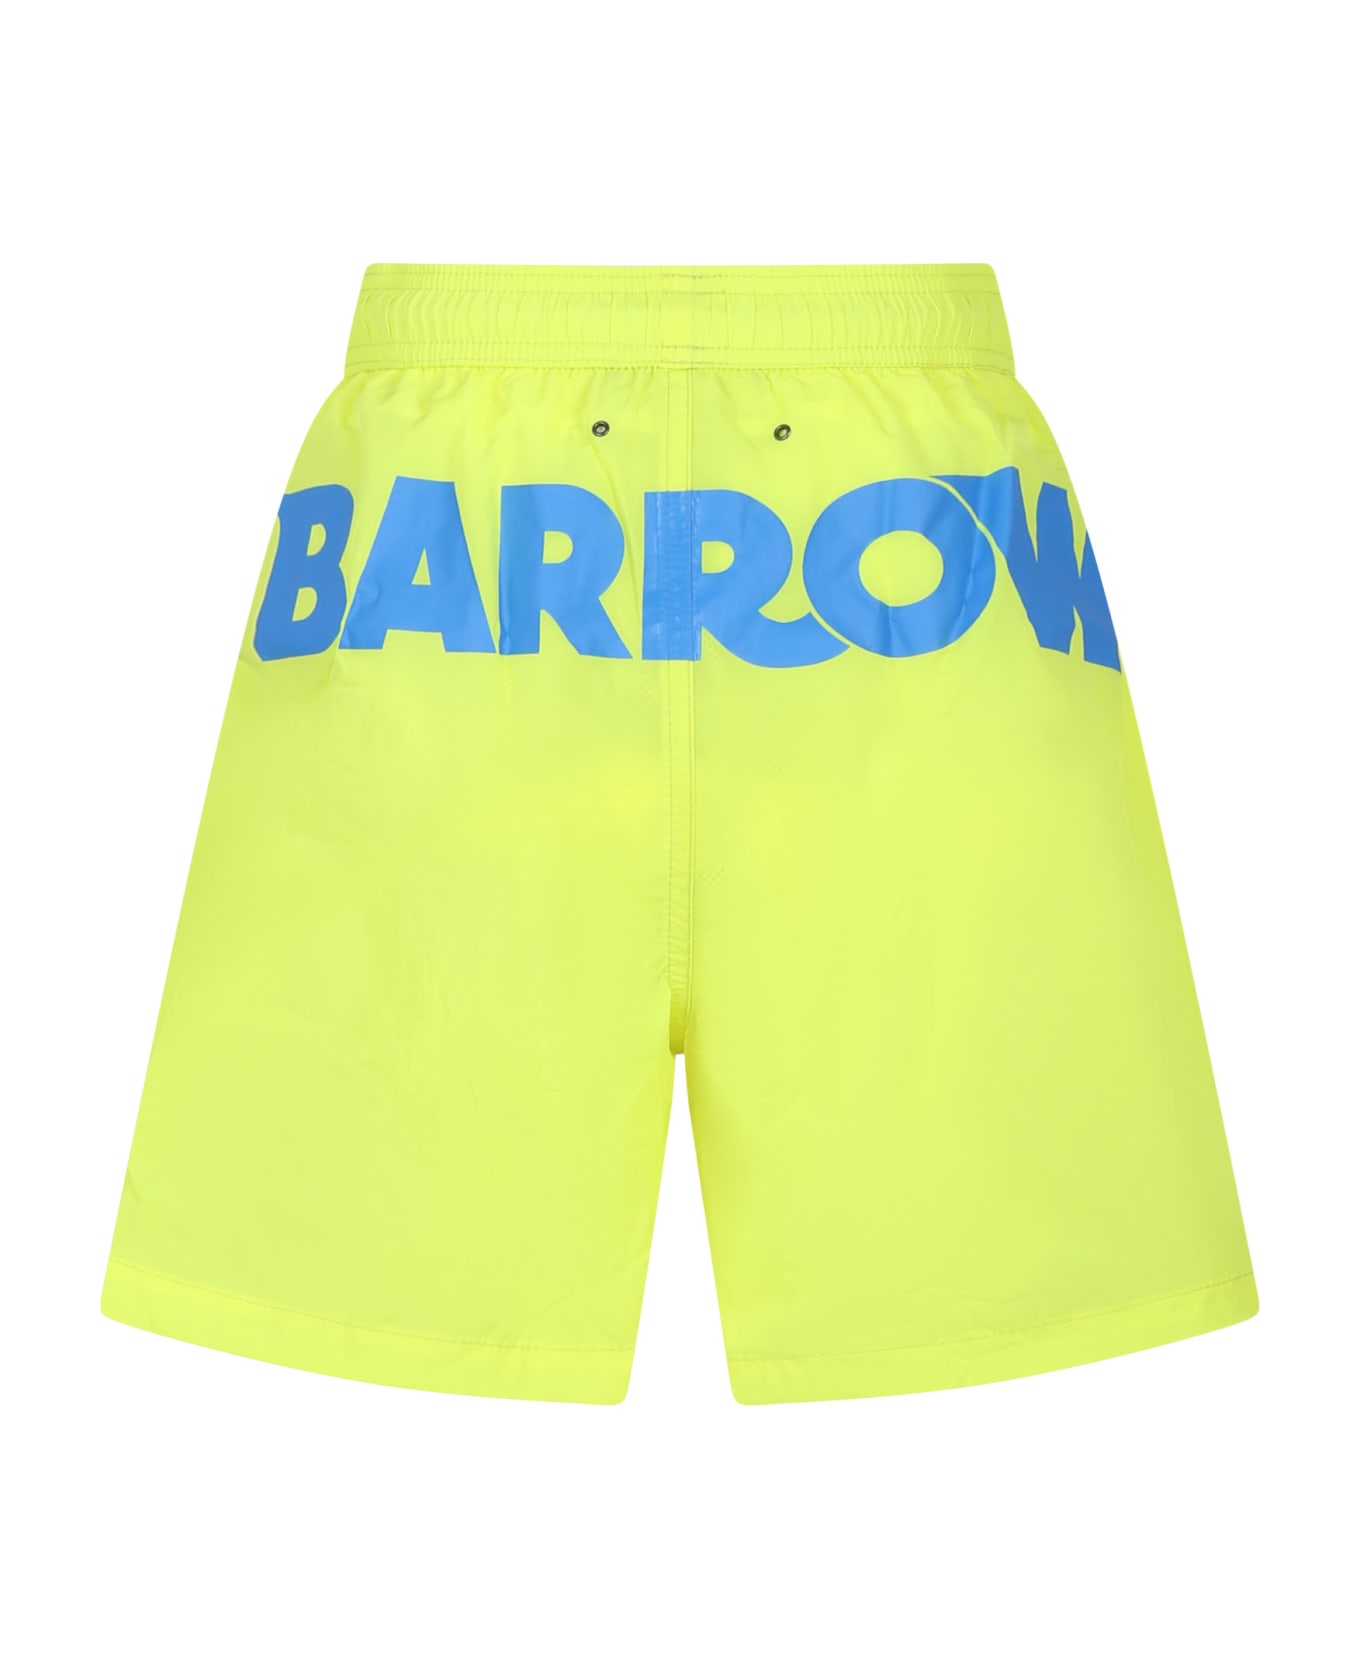 Barrow Yellow Swim Shorts For Boy With Smiley - Yellow